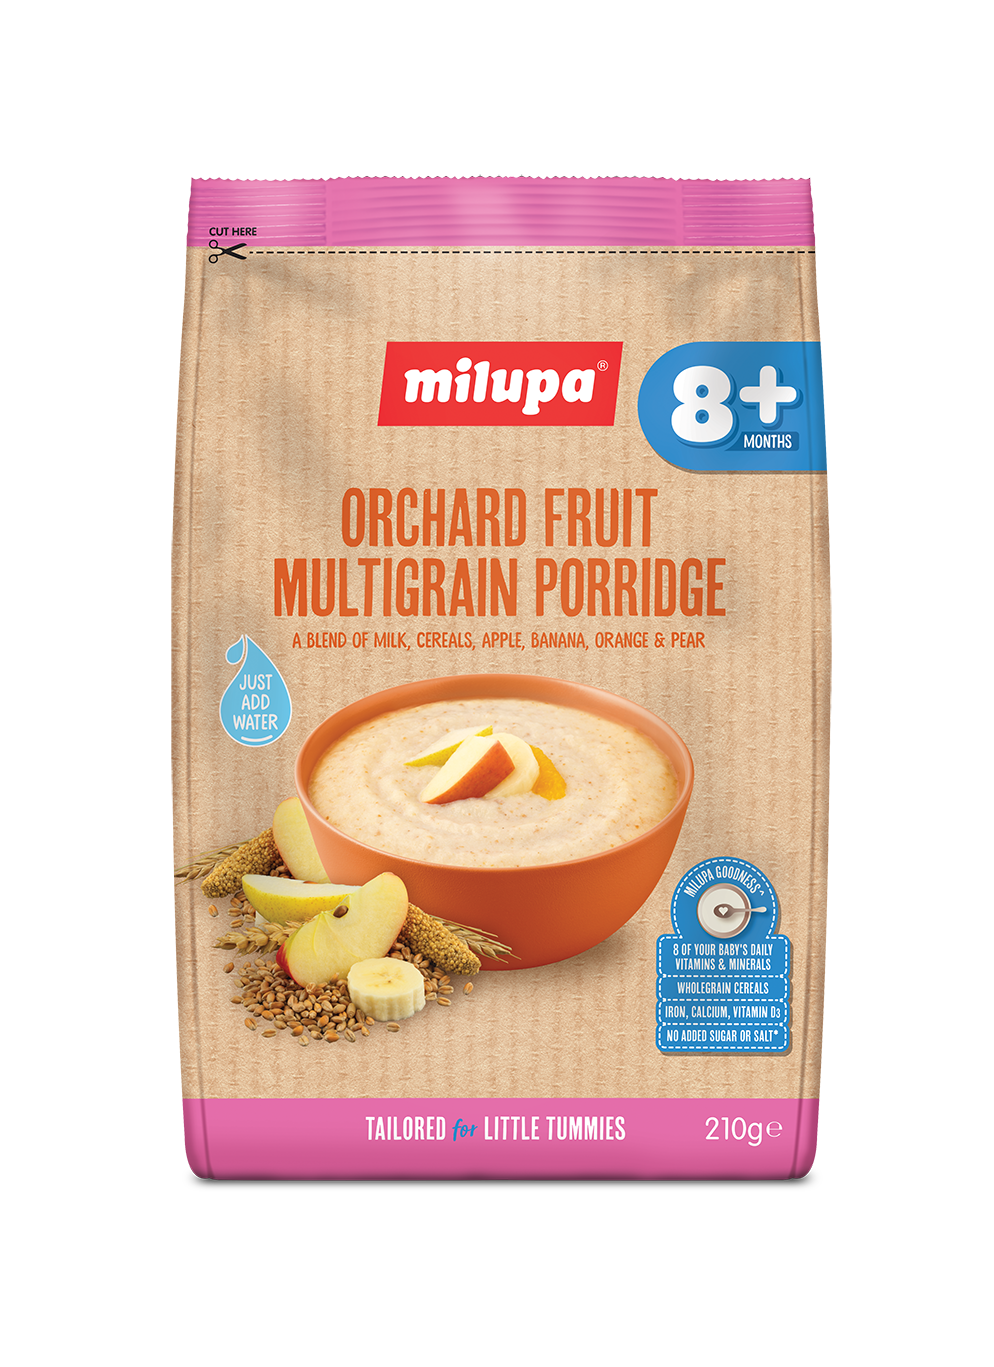 Orchard fruit multigrain porridge